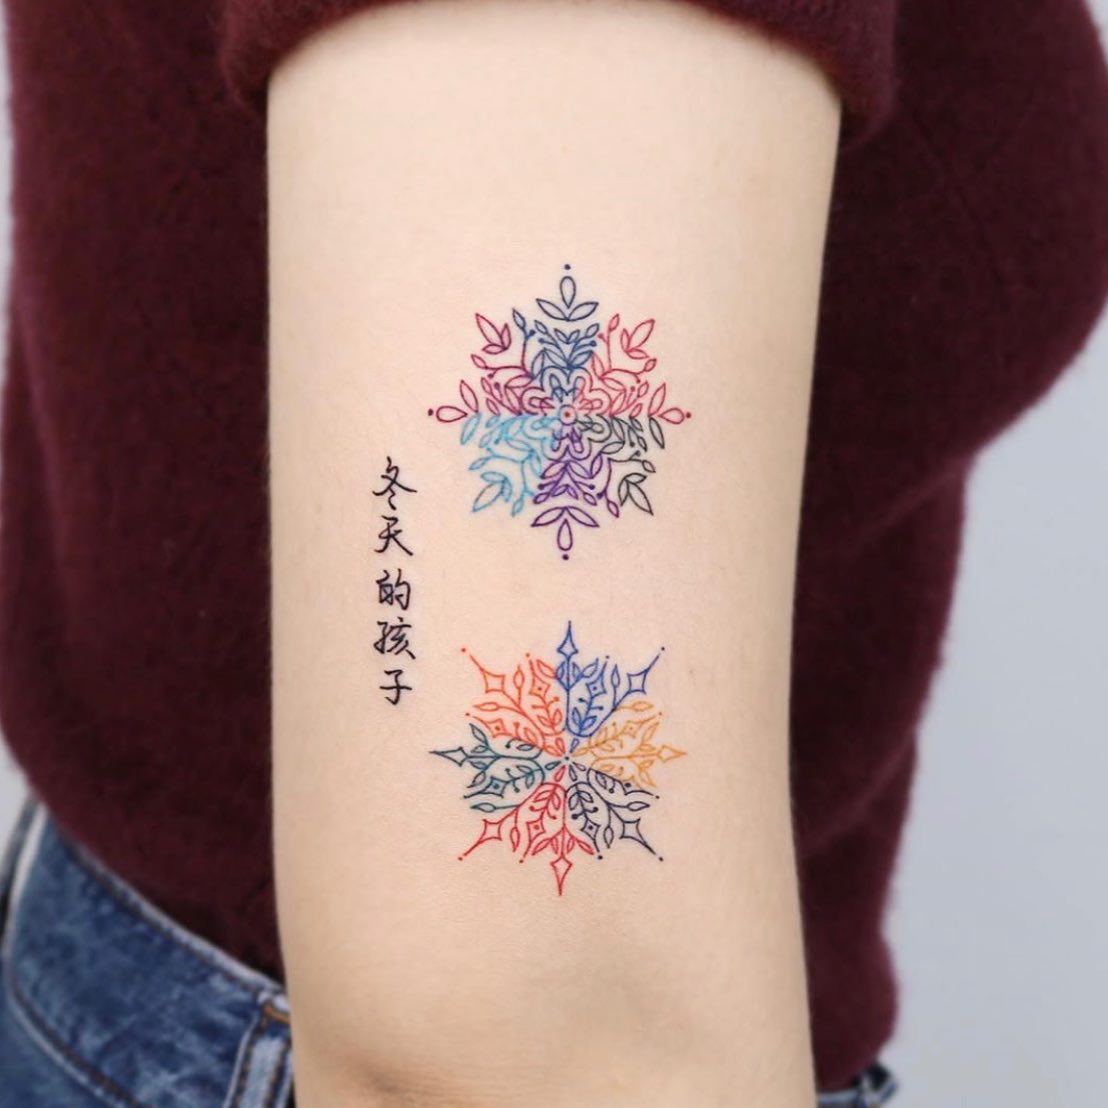 Watercolor snowflake tattoo by vismstudio